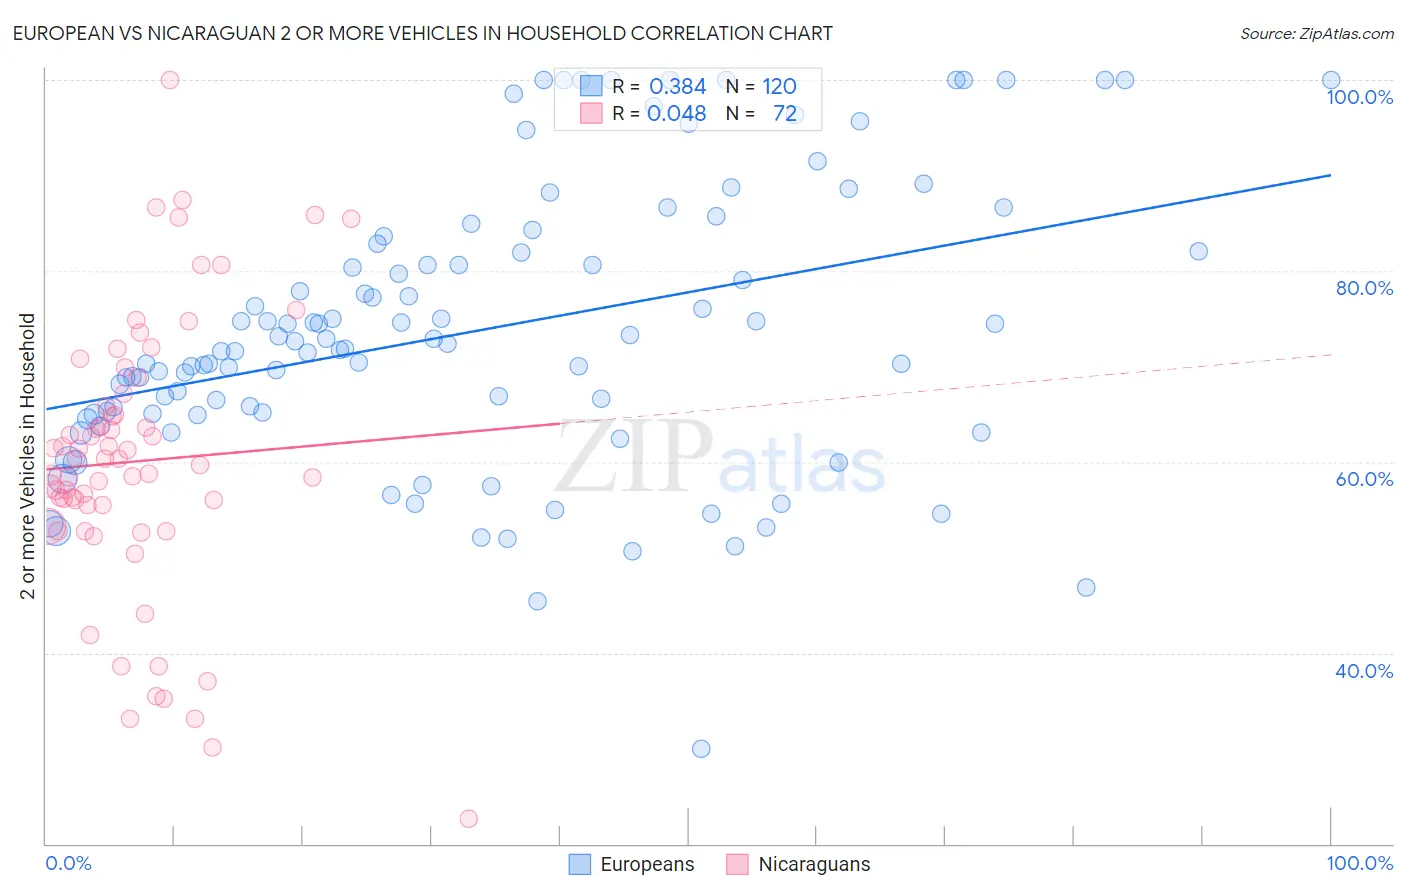 European vs Nicaraguan 2 or more Vehicles in Household